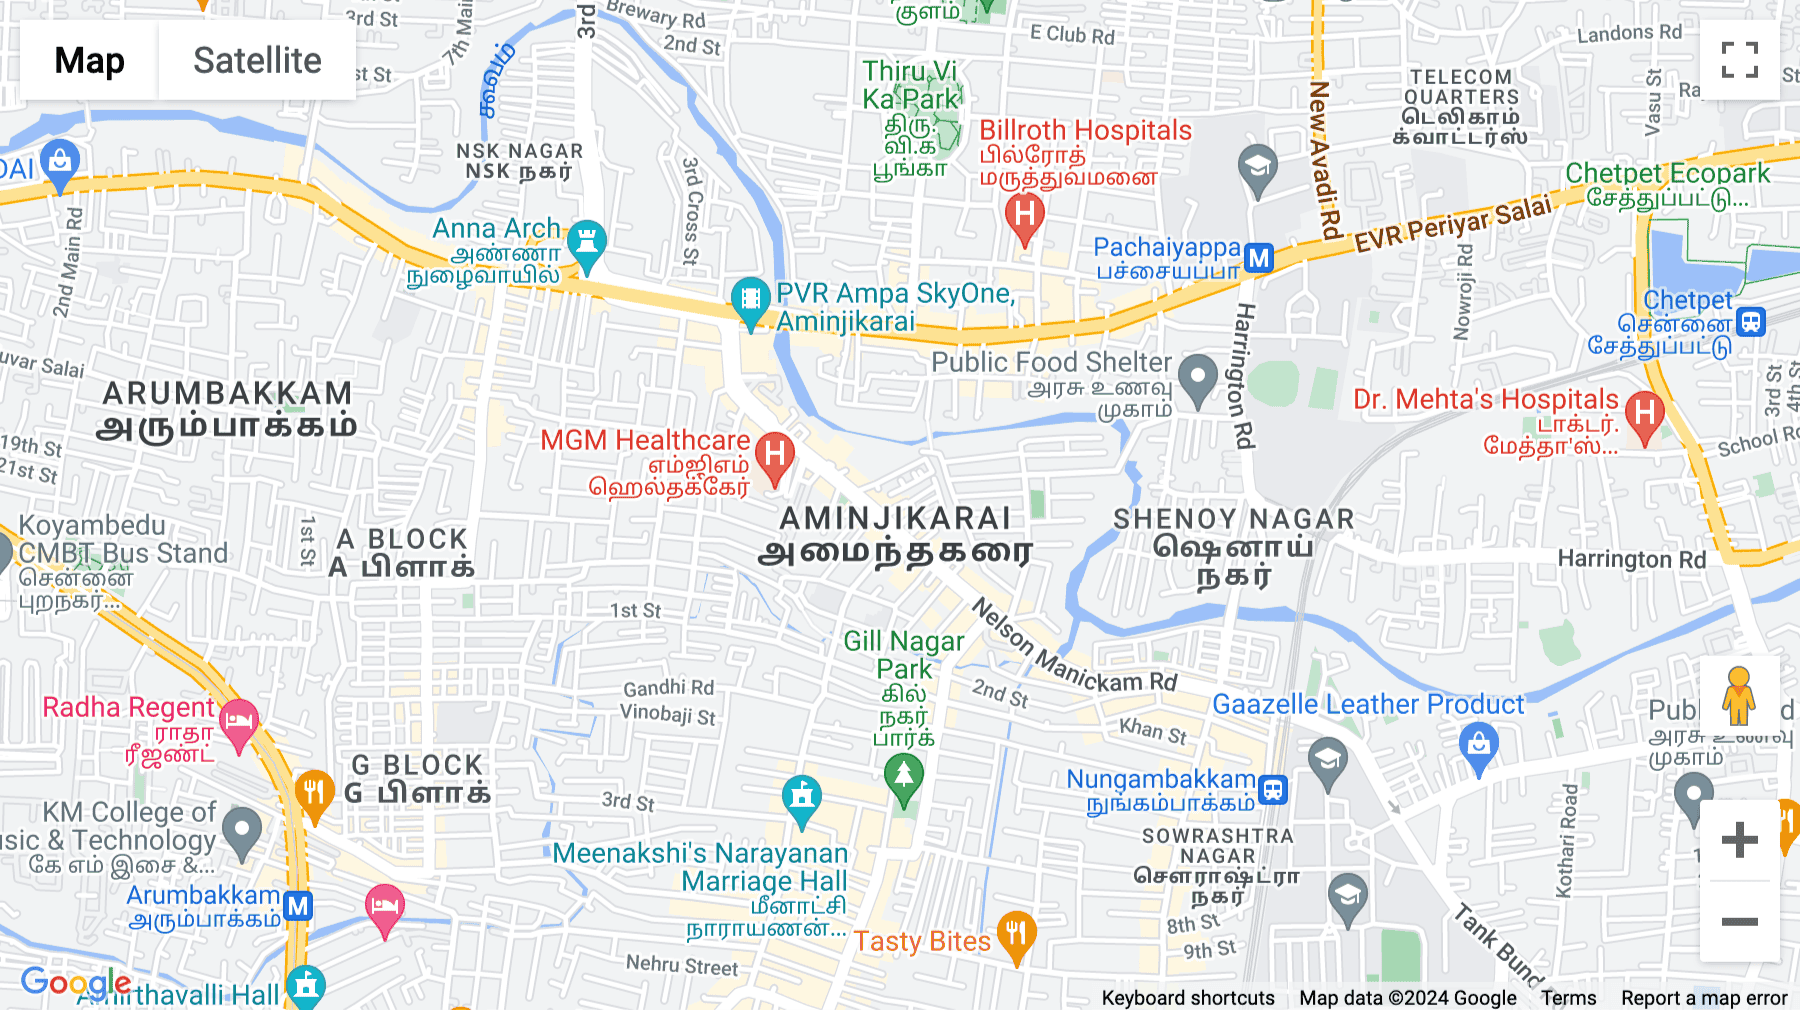 Click for interative map of Nelson Tower, 51/117 Nelson Manickam Road, Aminjikarai, Chennai